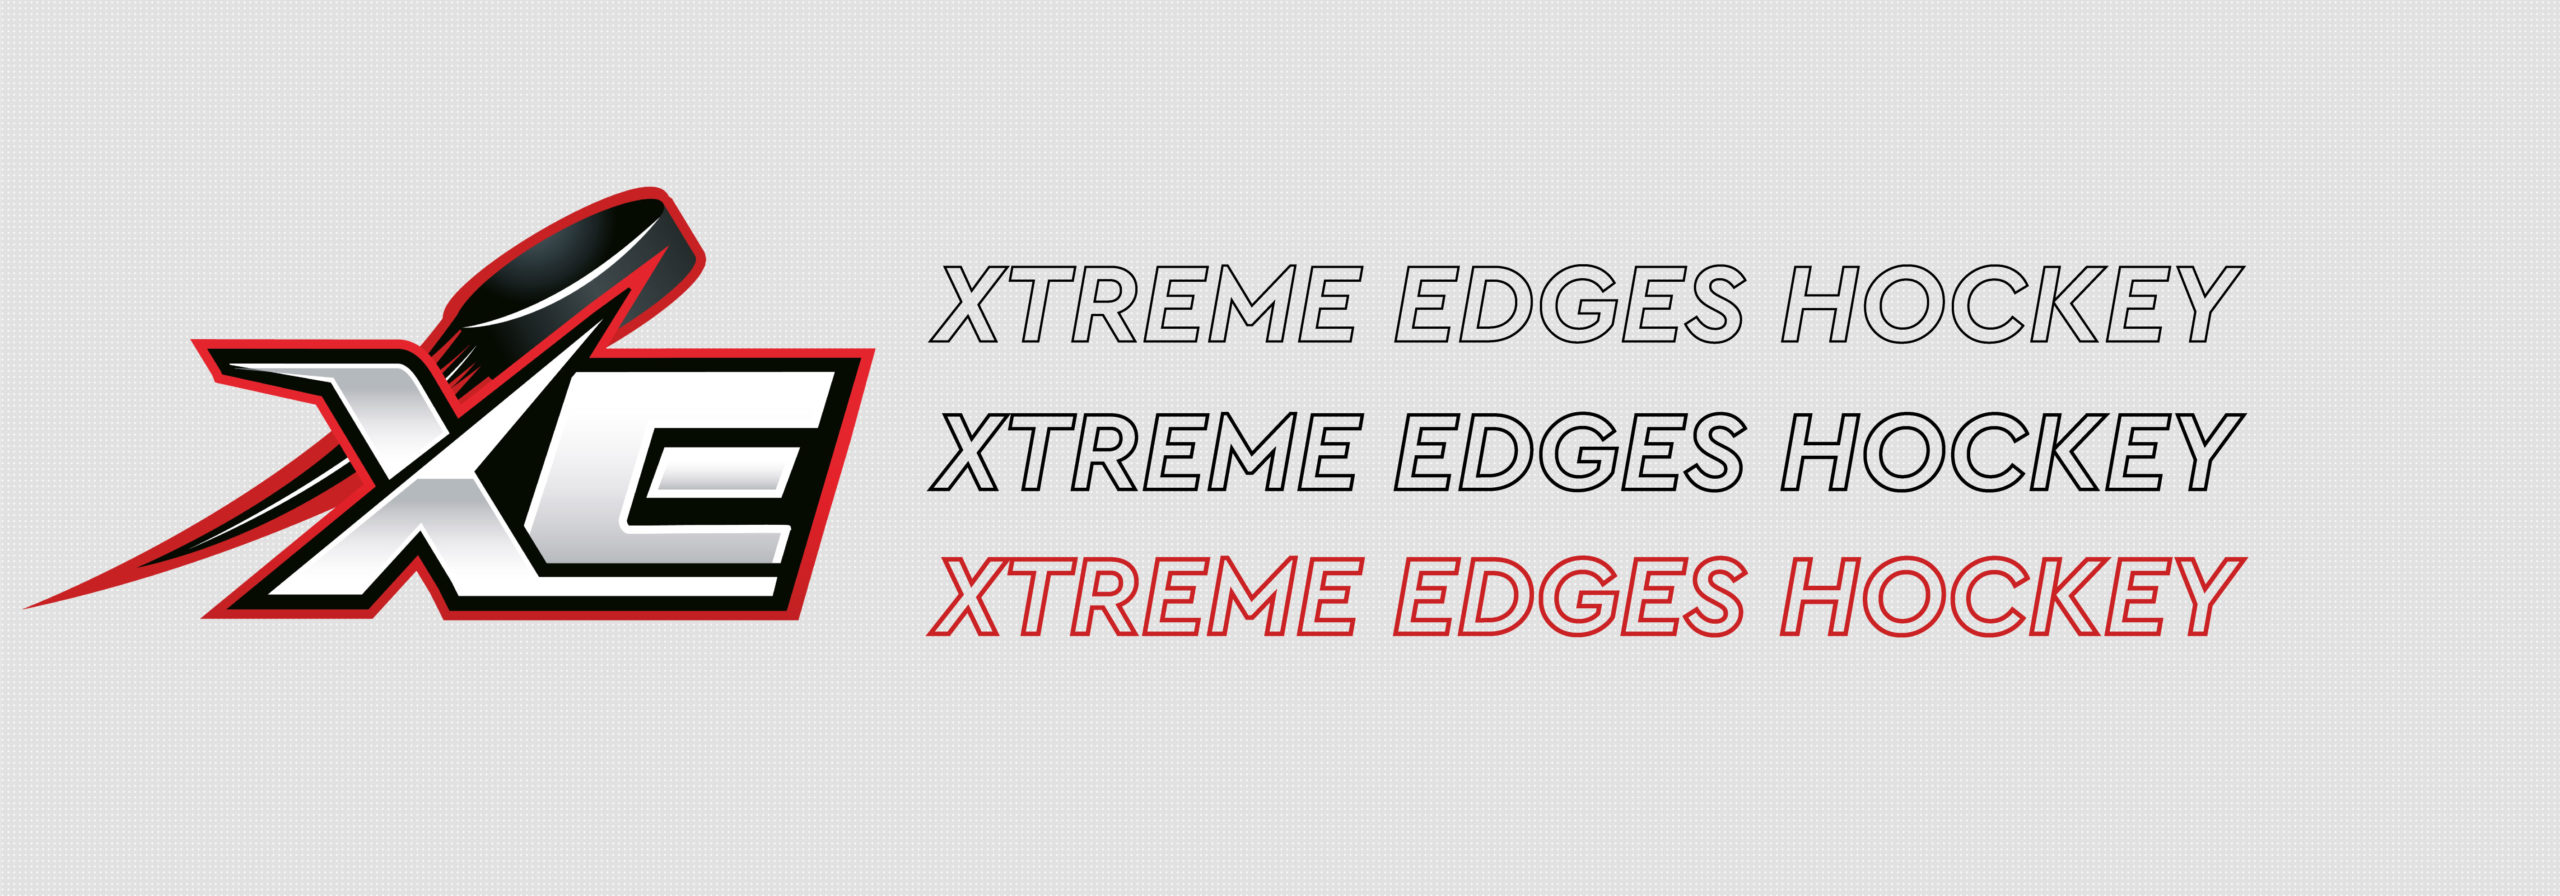 Xtreme Edges Technical T-Shirt